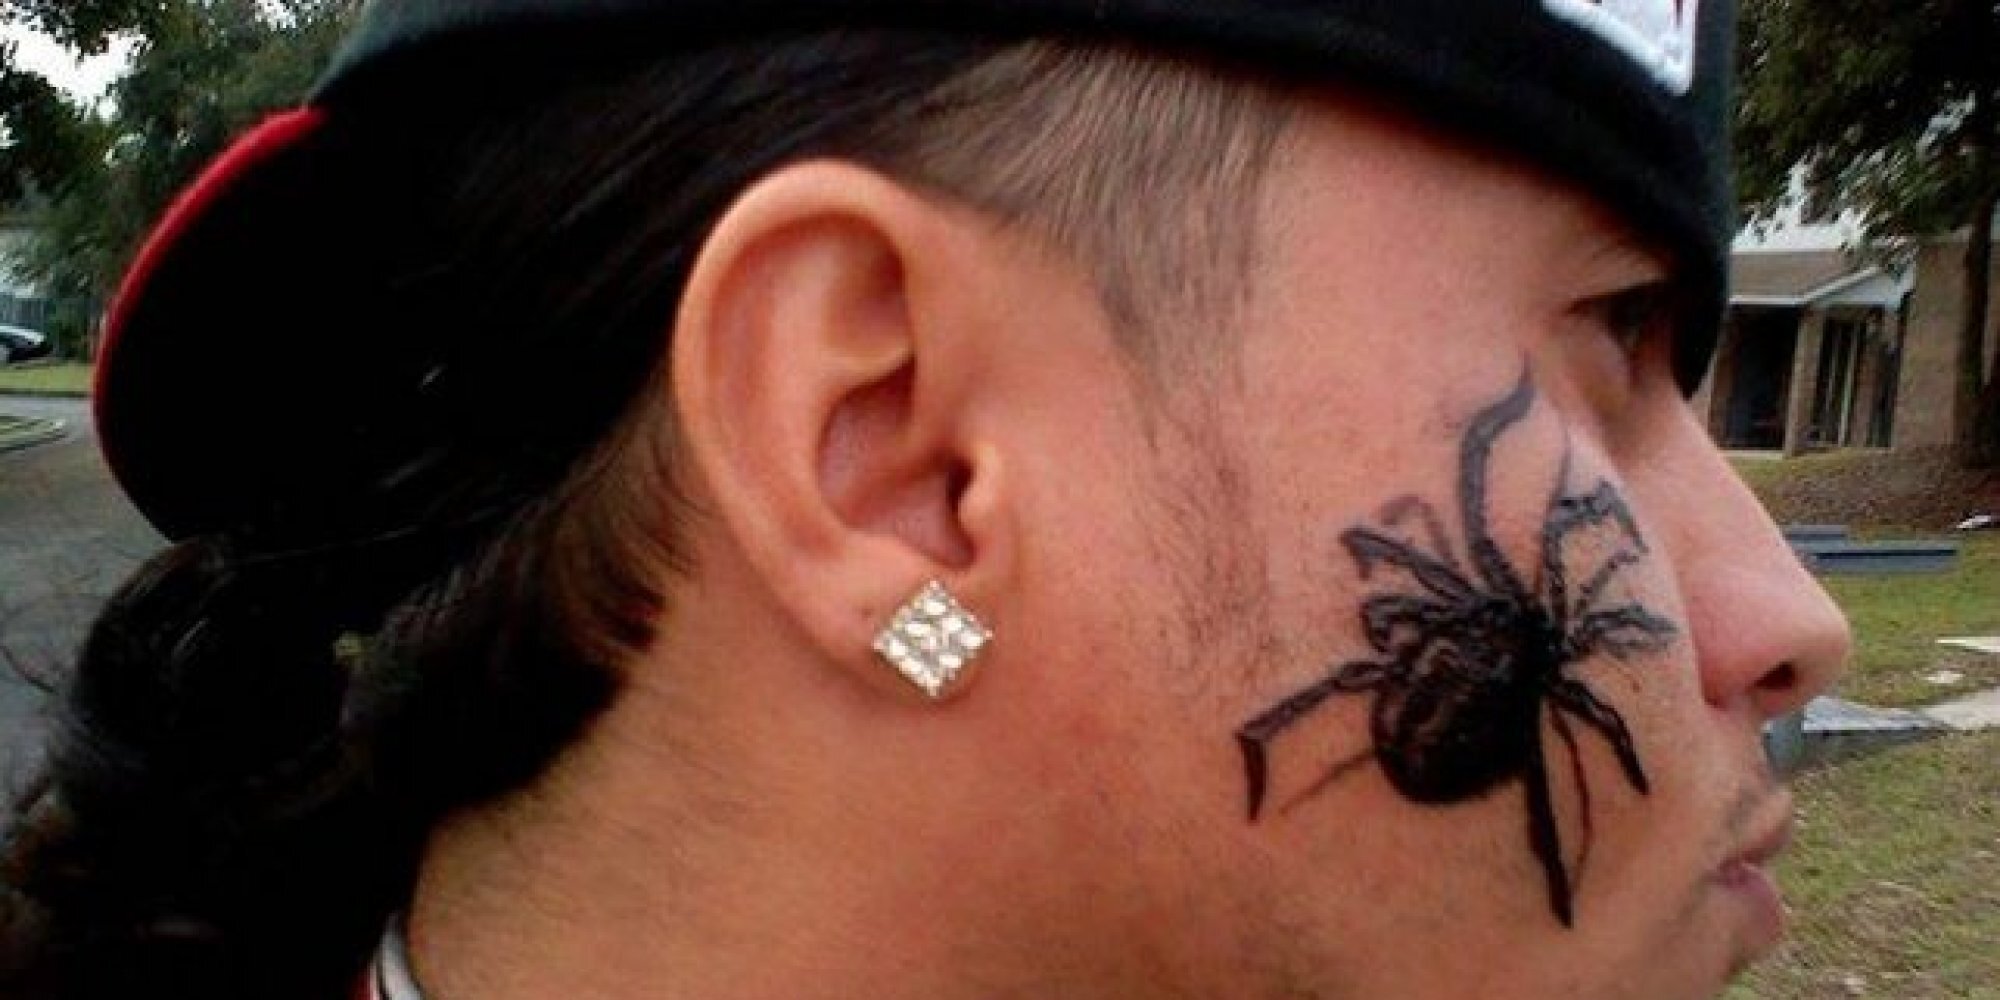 18 Cool Spider Tattoo Ideas - Styleoholic